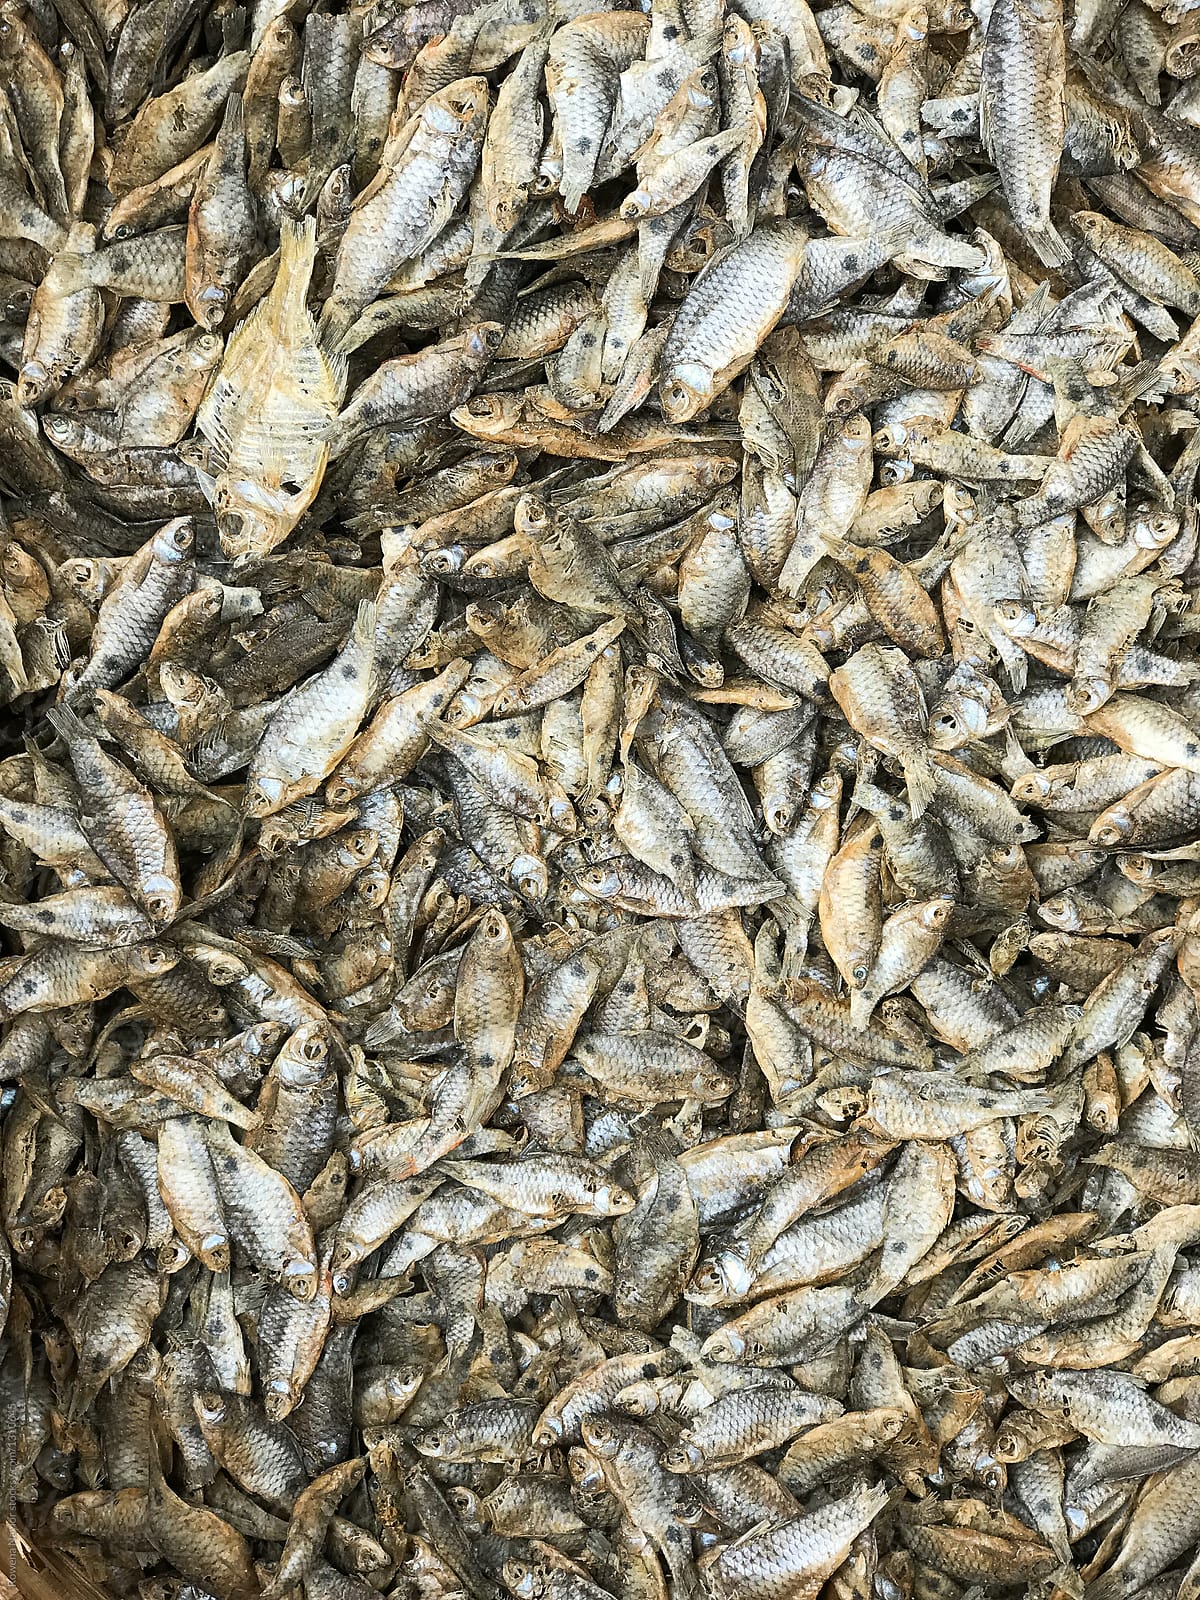 Small dried river fish at market, Myanmar